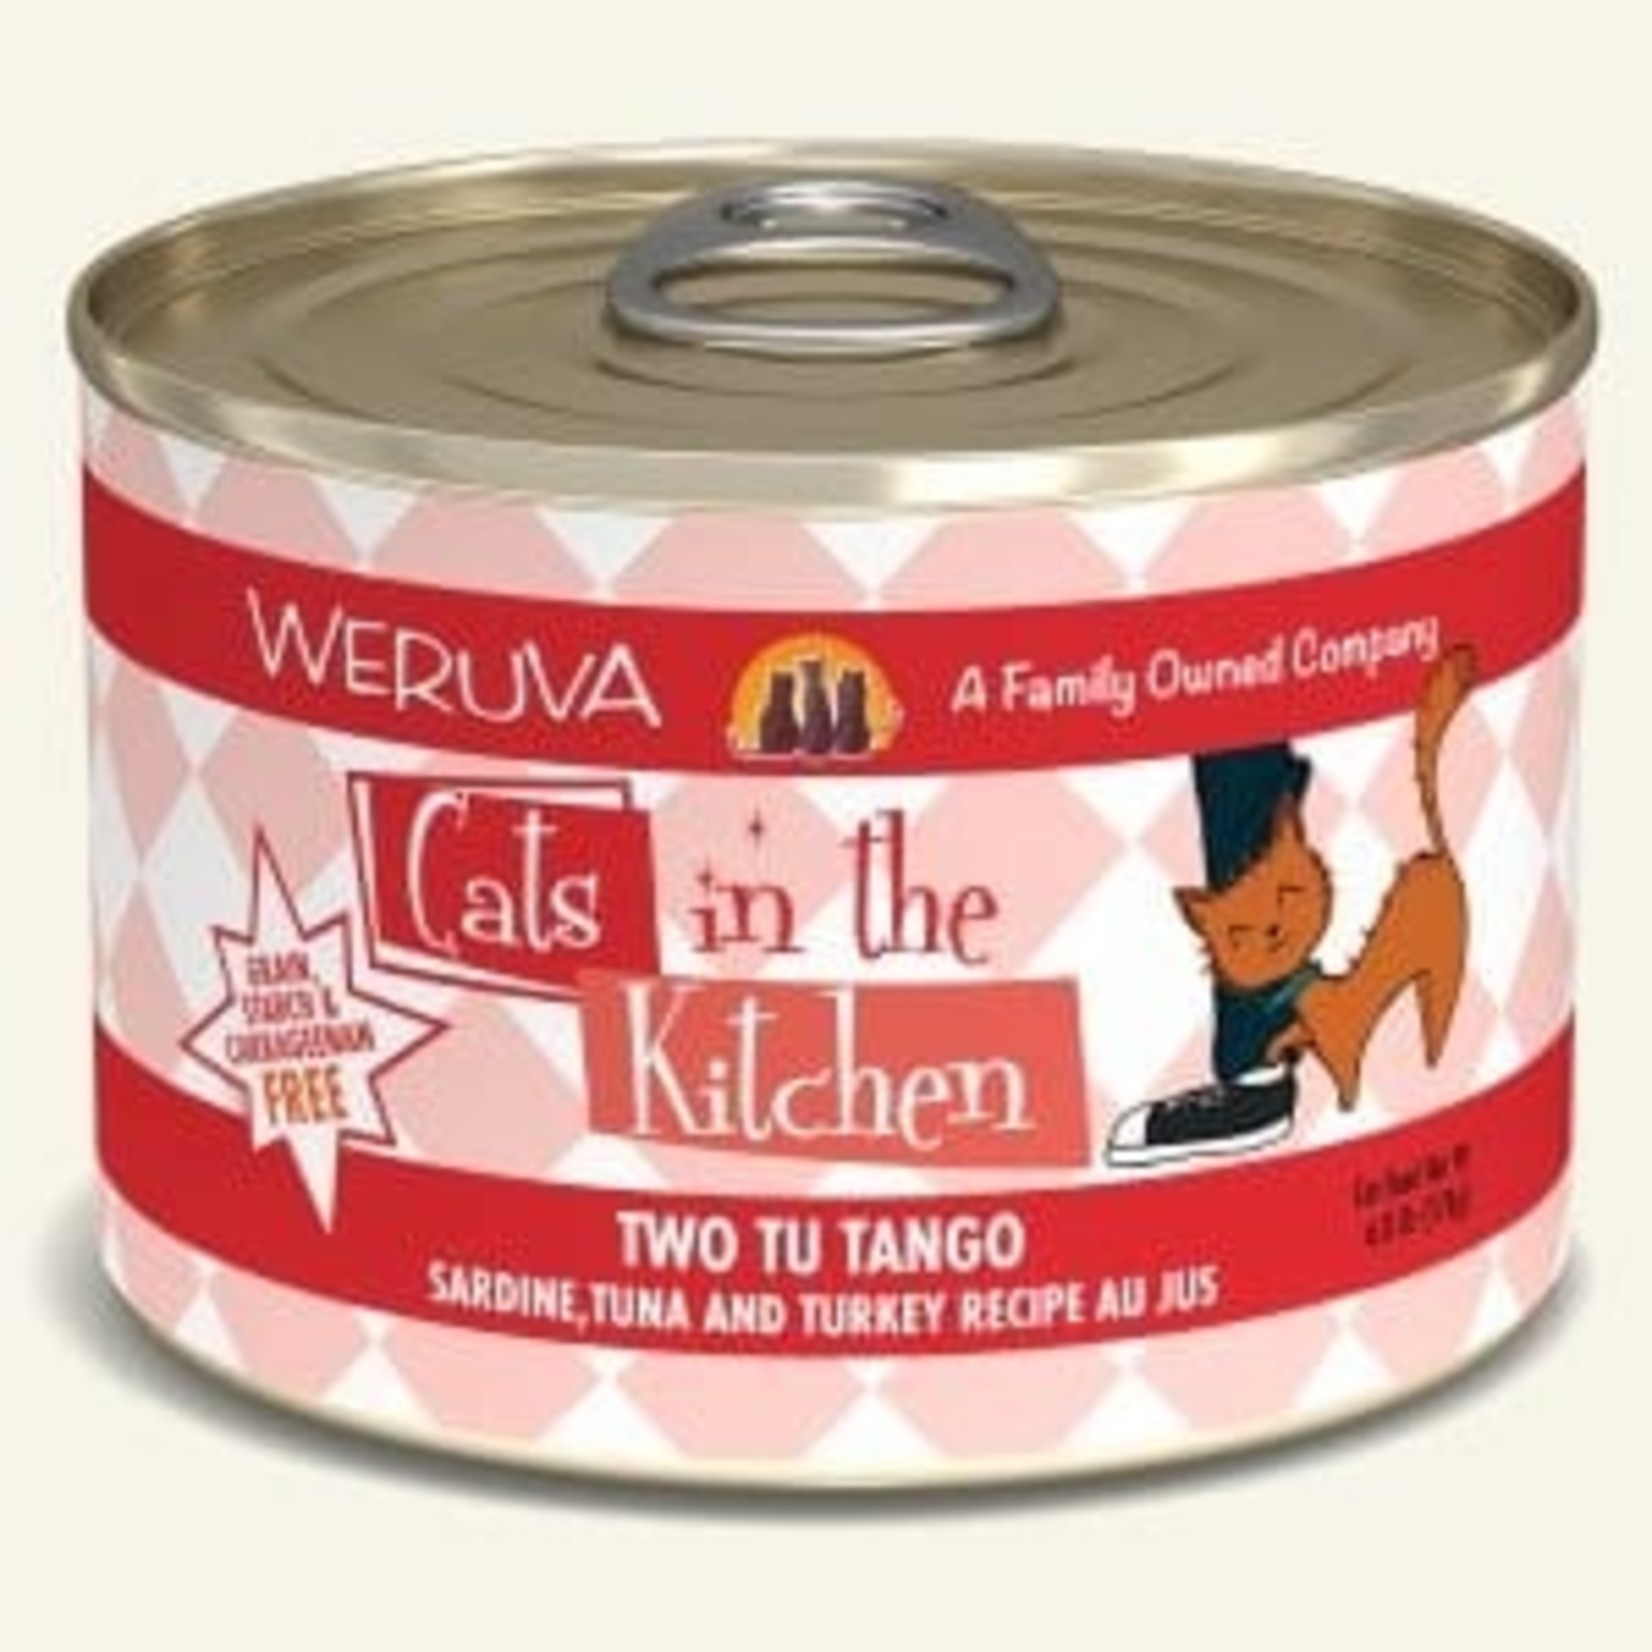 Weruva Weruva Cats in the Kitchen  Wet Cat Food Two Tu Tango  Sardine, Tuna and Turkey Recipe Au Jus 6oz Can